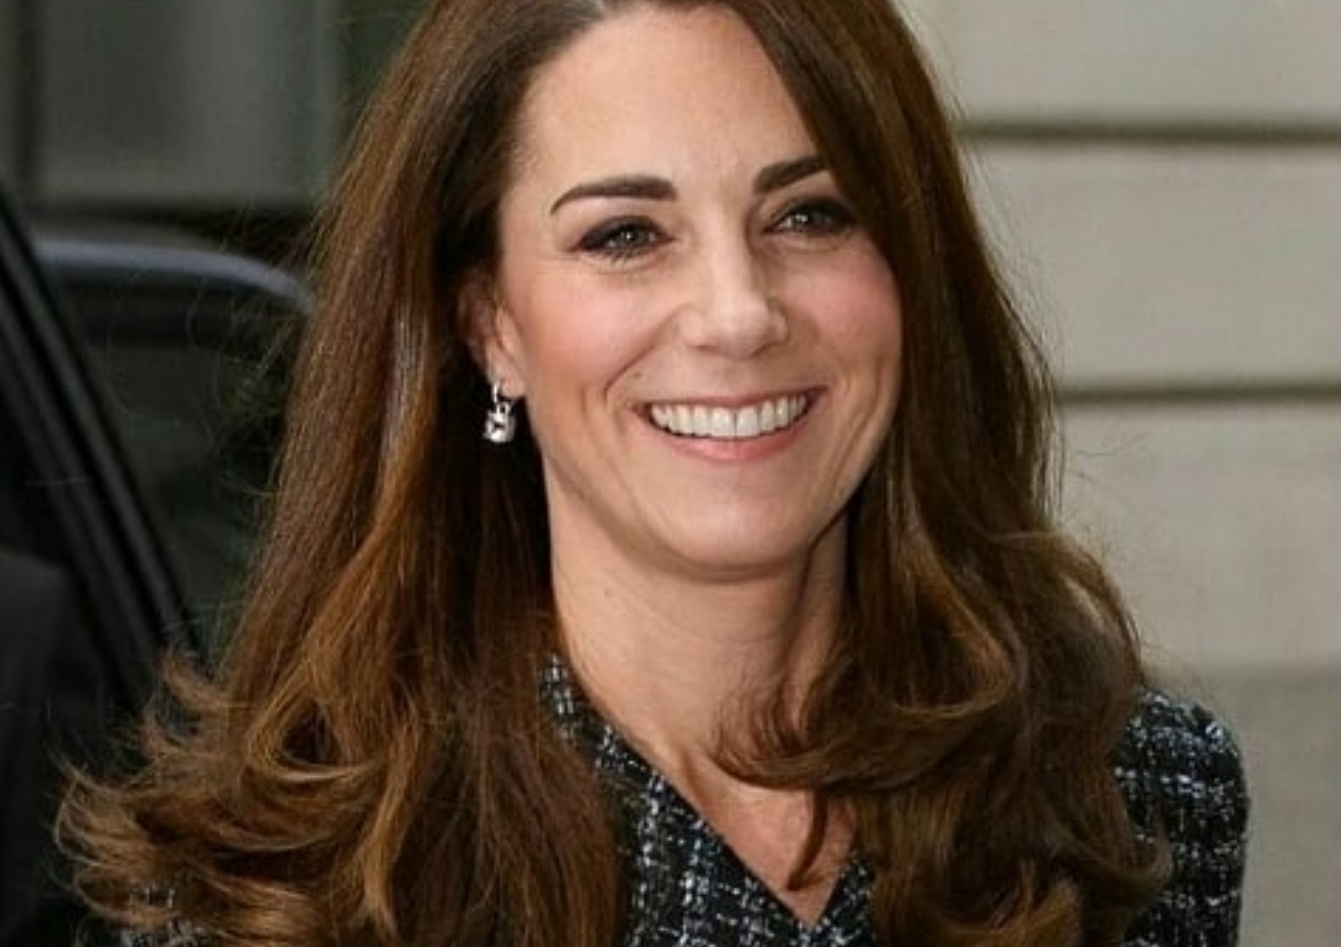 Usuarios en redes sociales afirman que Kate Middleton podría utilizar botox